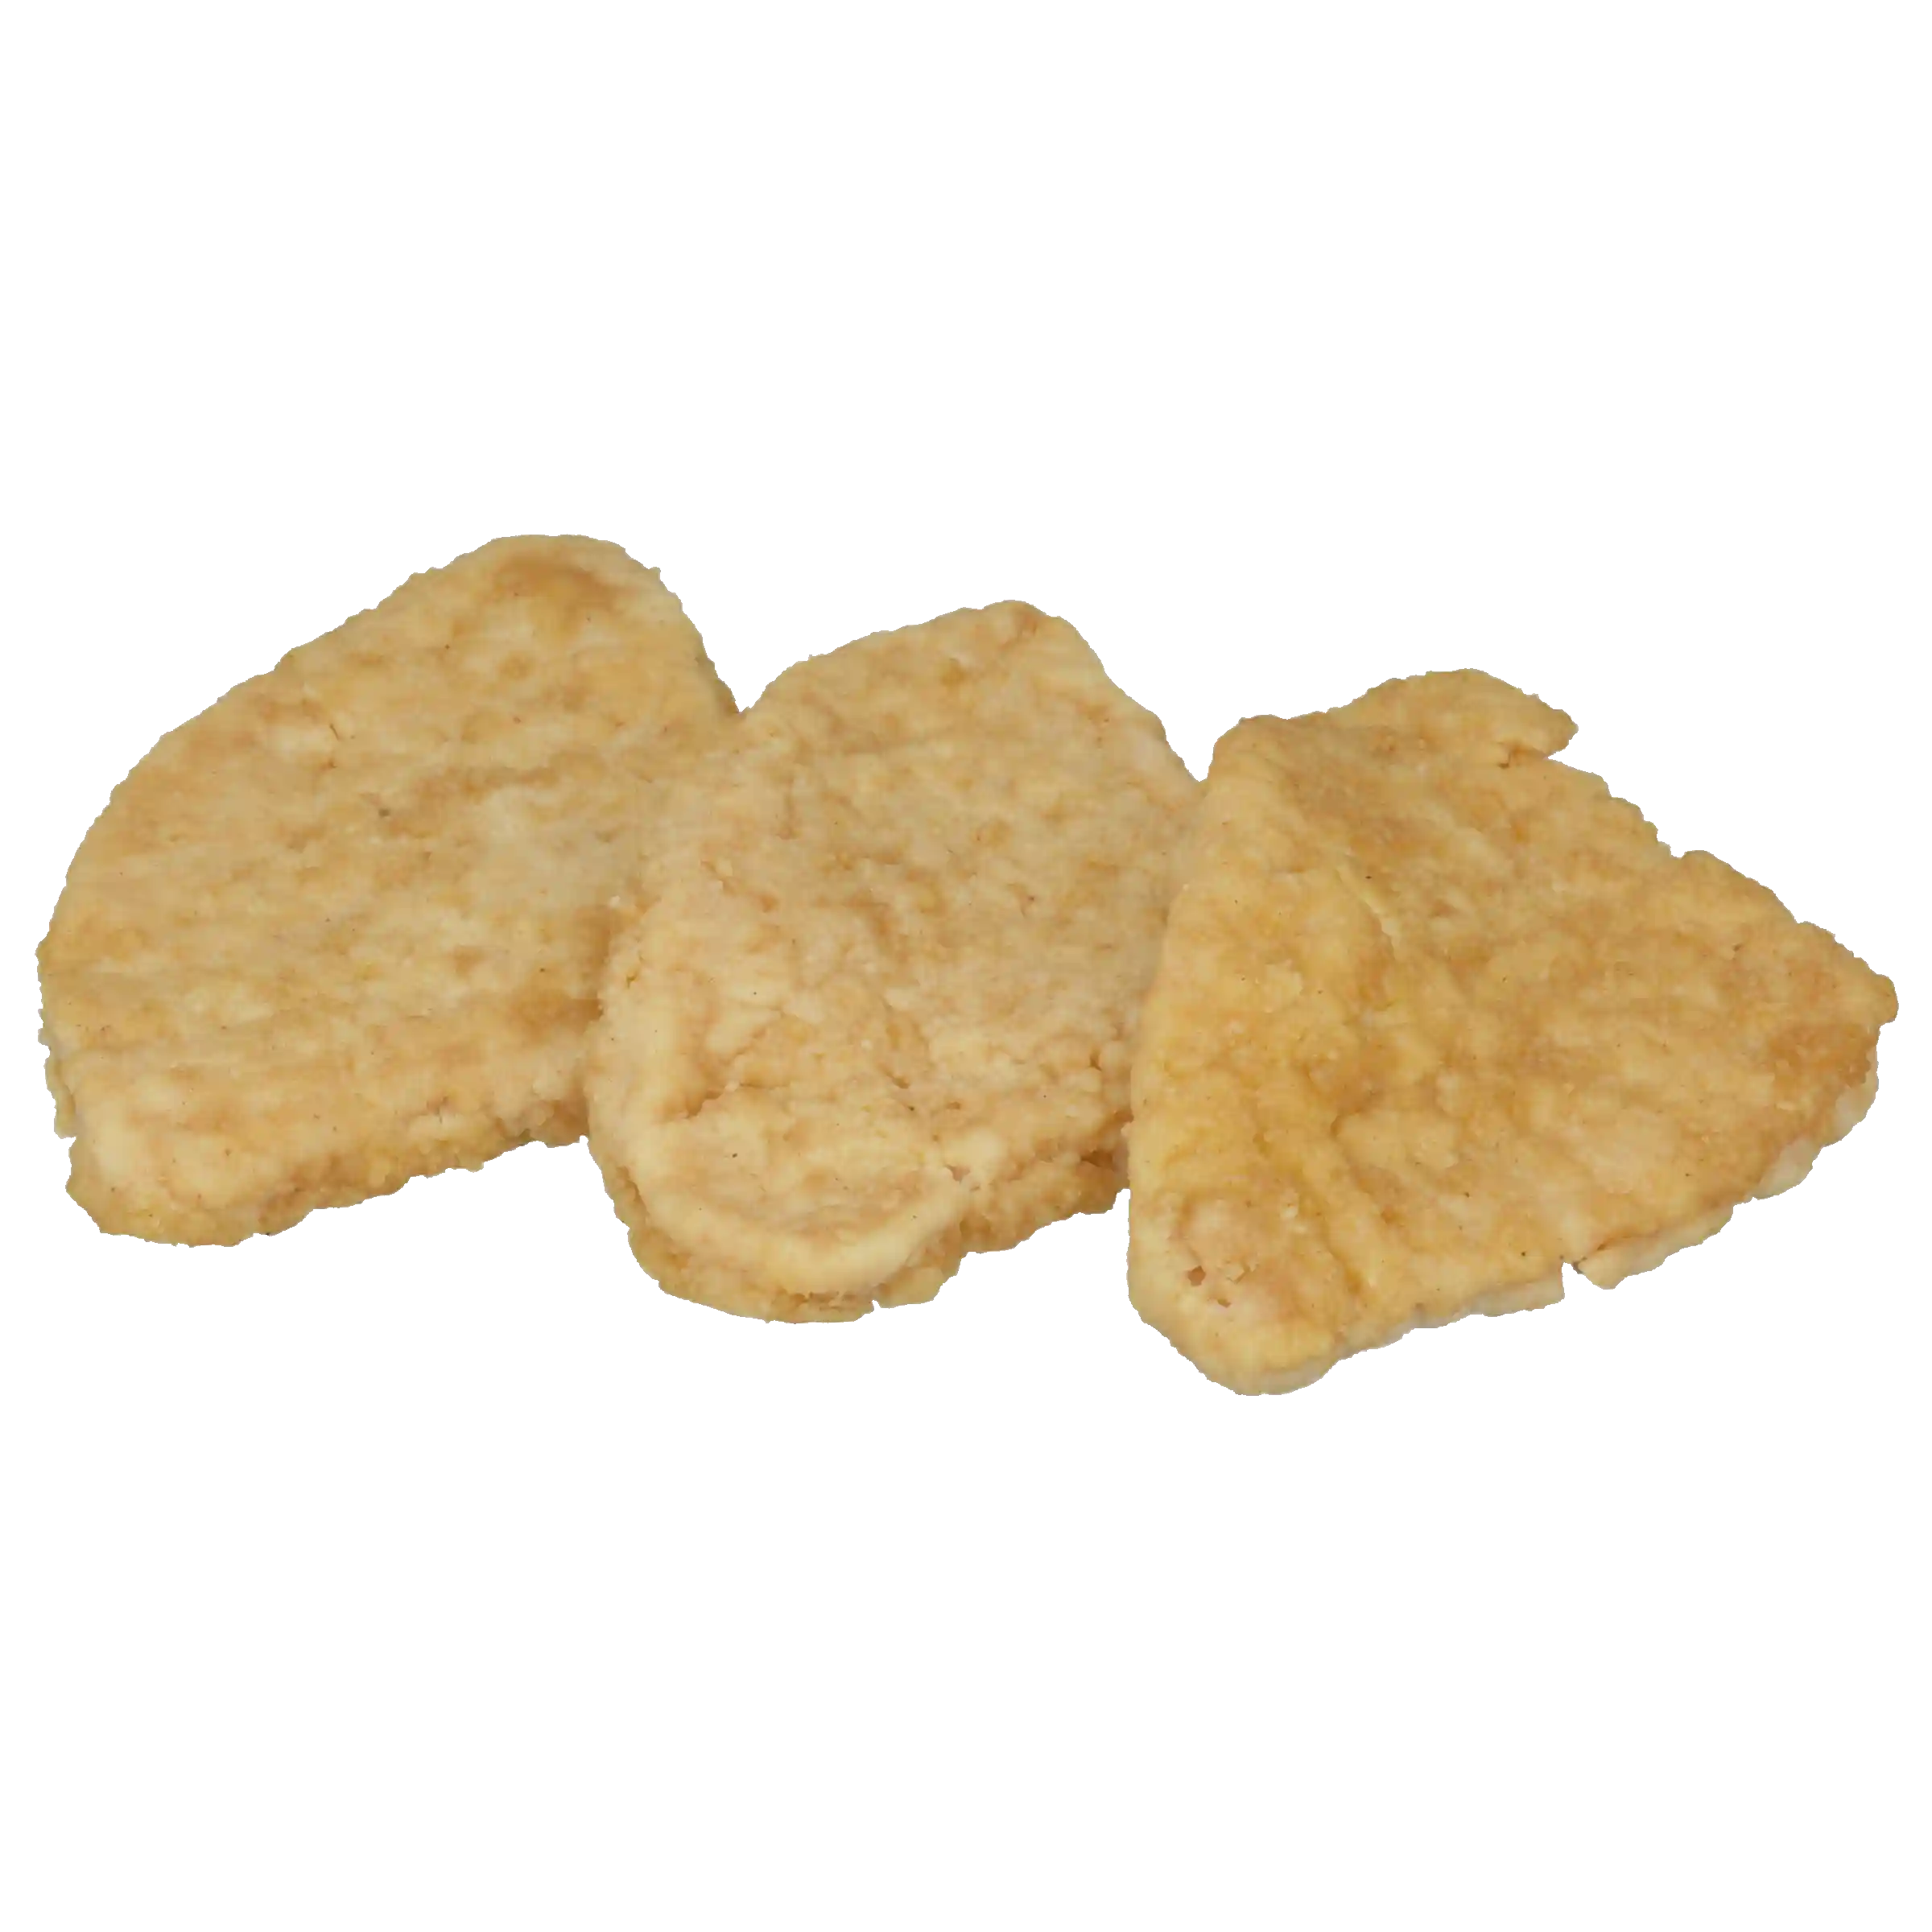 Tyson Red Label® Uncooked Golden Crispy Chicken Breast Pattie Fritters, 3.2 oz. https://images.salsify.com/image/upload/s--LaWhkW3Z--/q_25/kkt42osmdhccemmj6pxh.webp